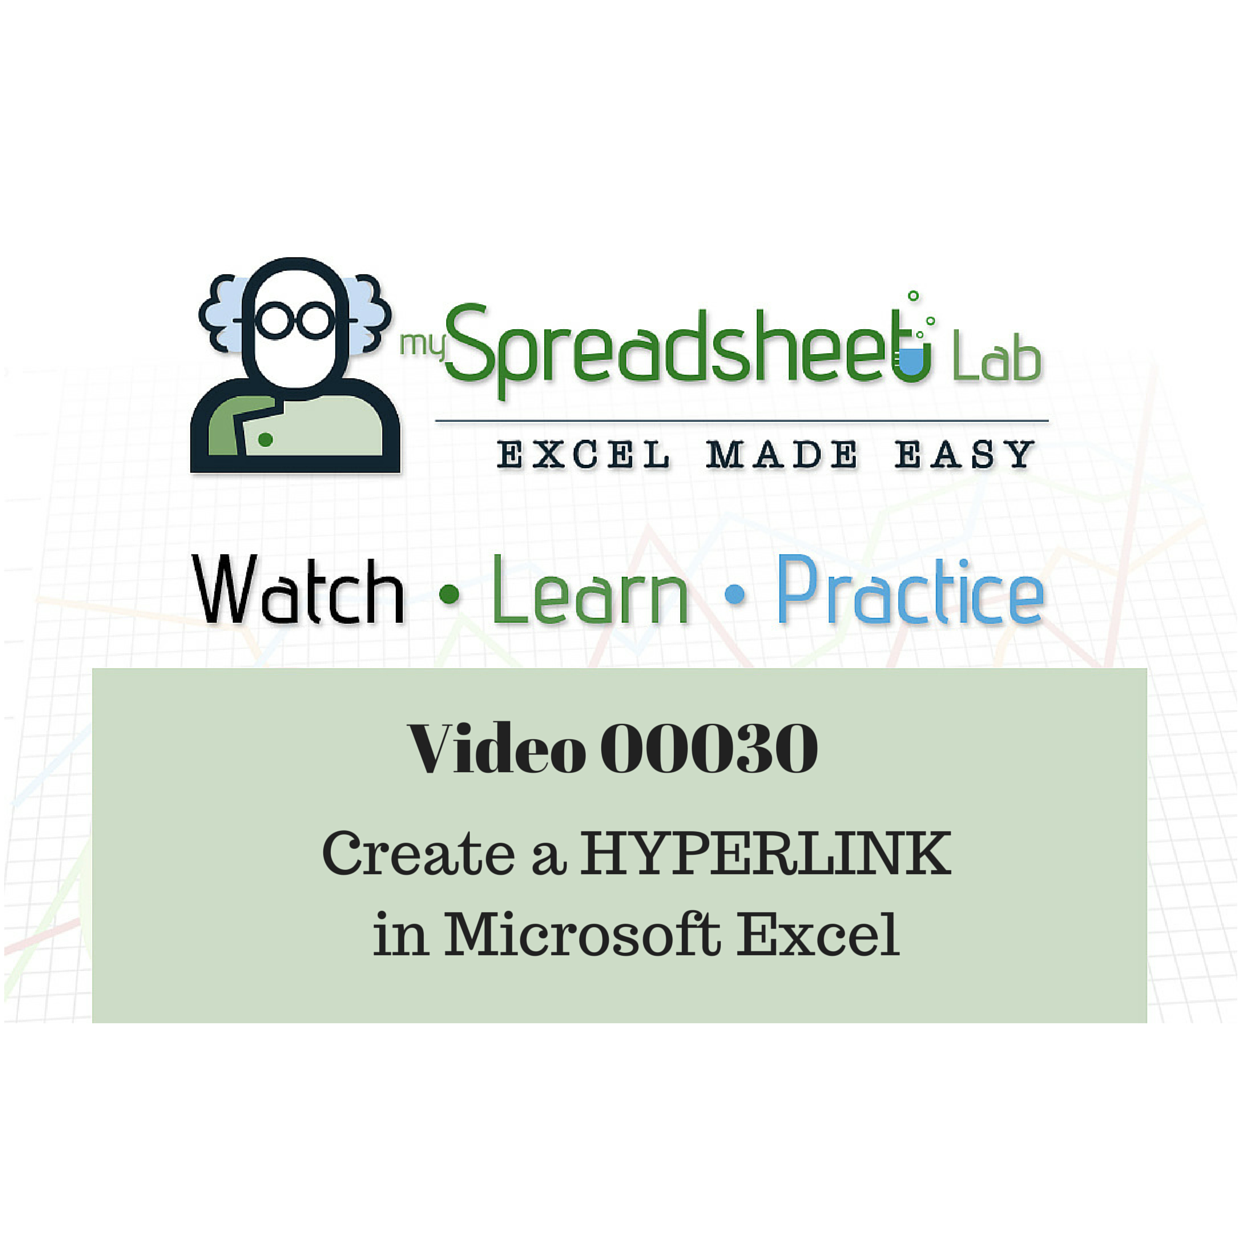 Video 00030 Create a HYPERLINK in Microsoft Excel